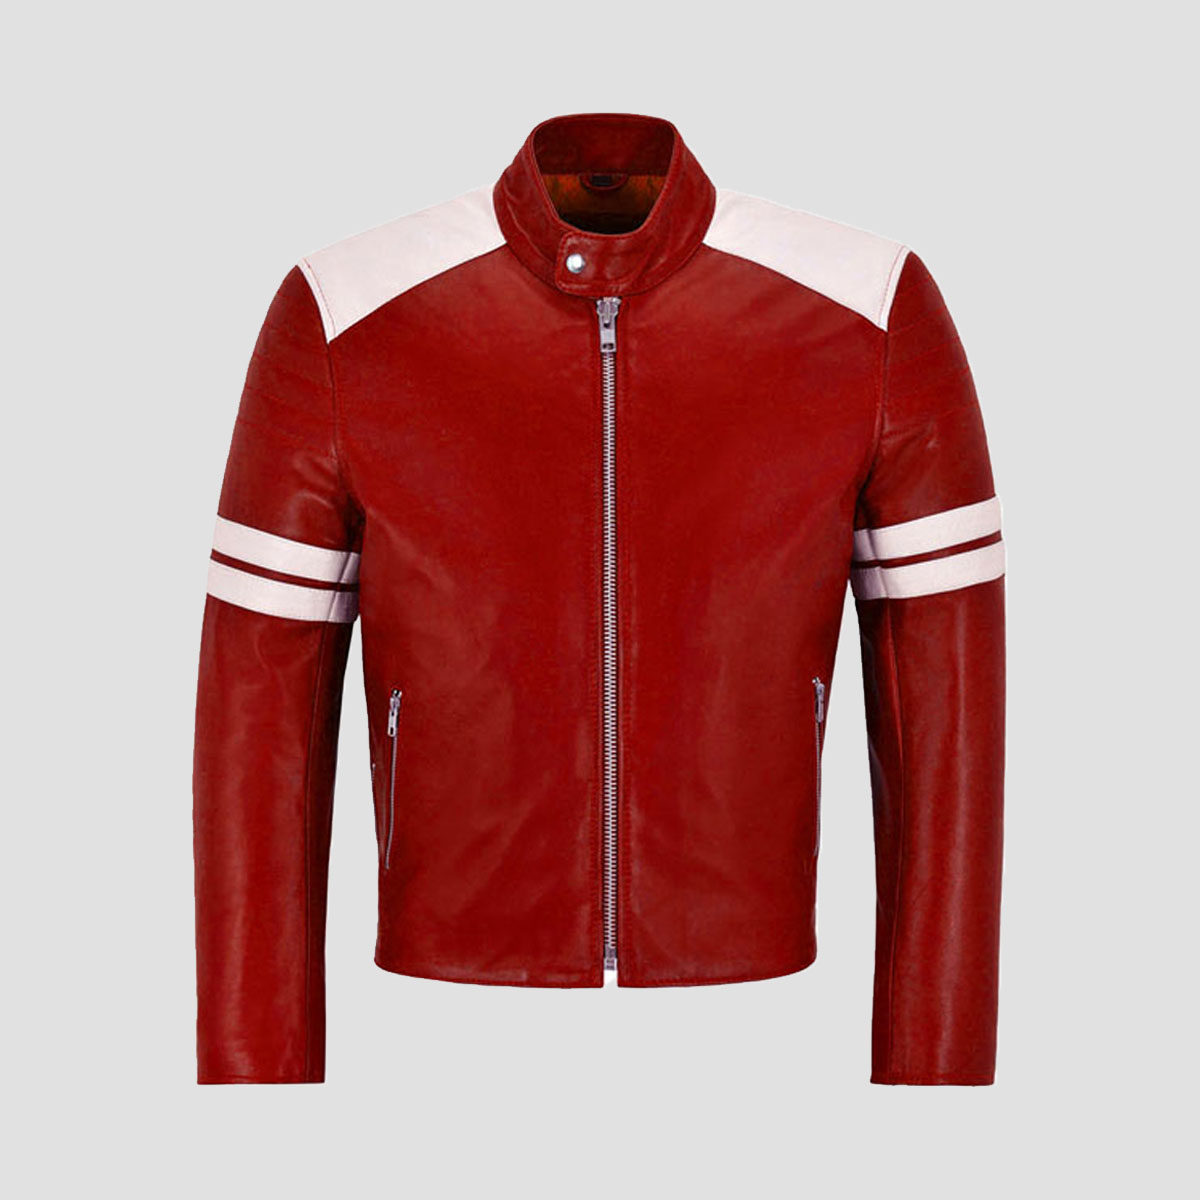 Usaleatherfactory Men's Vintage Racer Leather Jacket